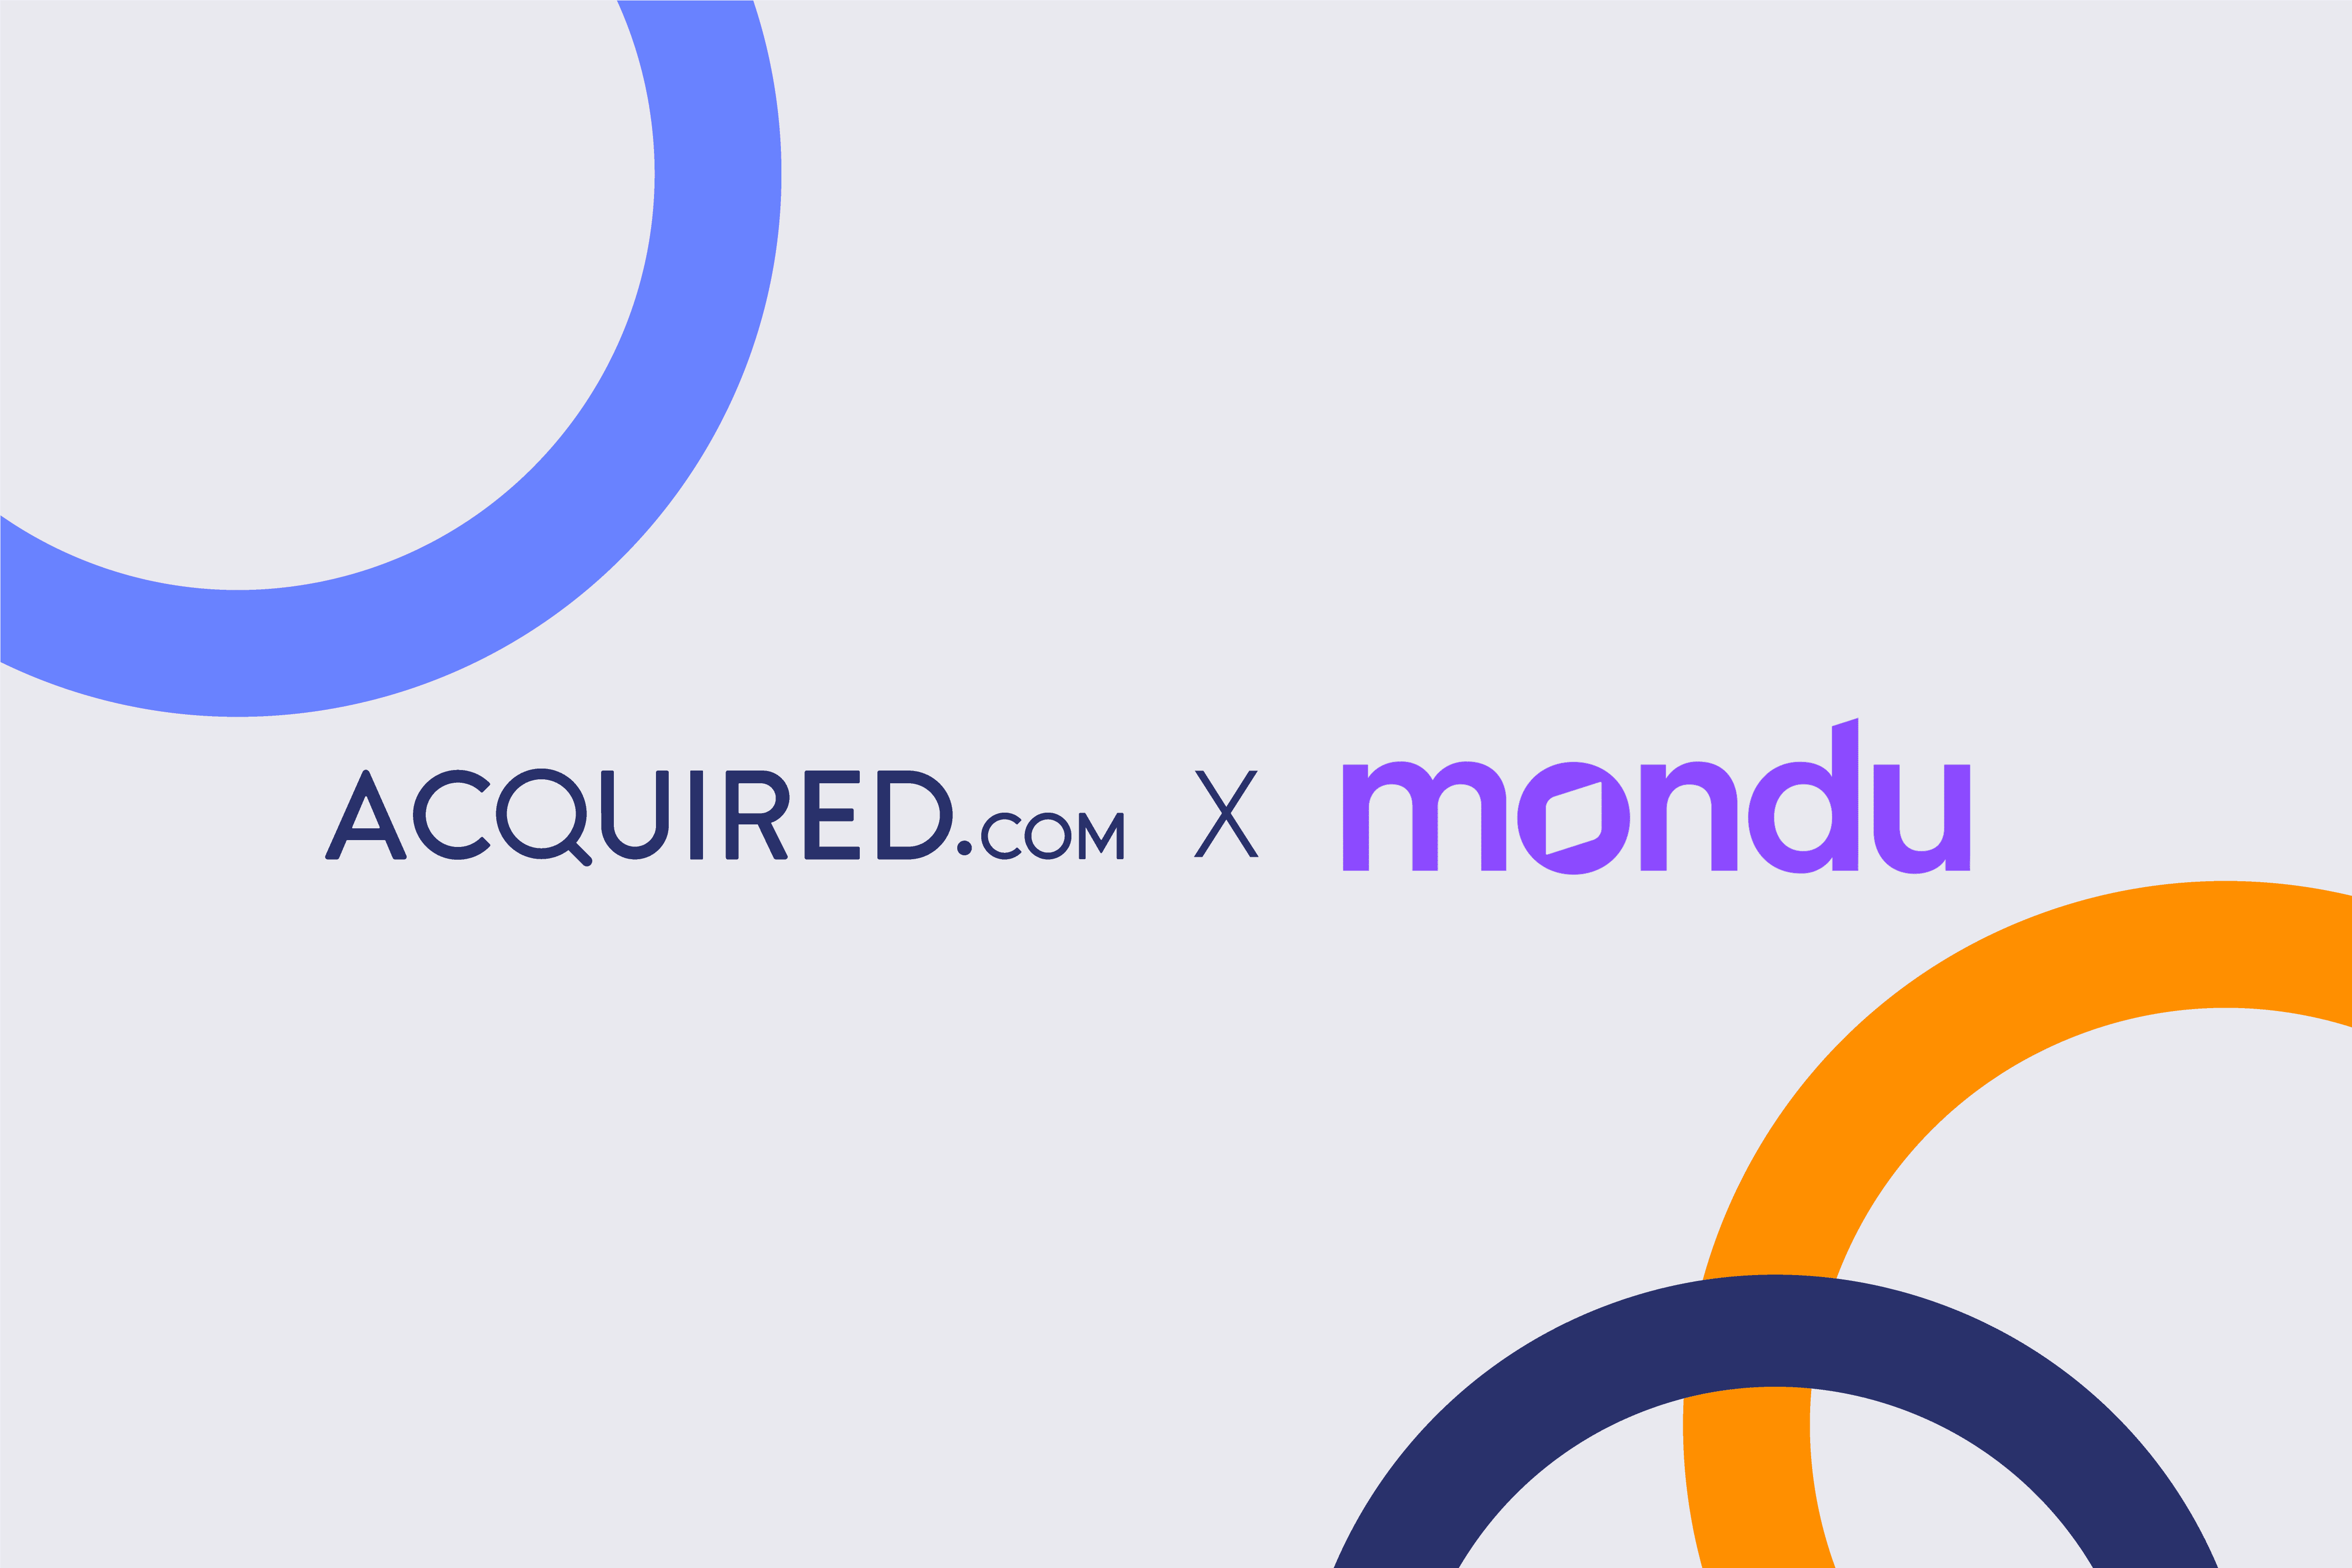 Acquired.com and Mondu Partnership